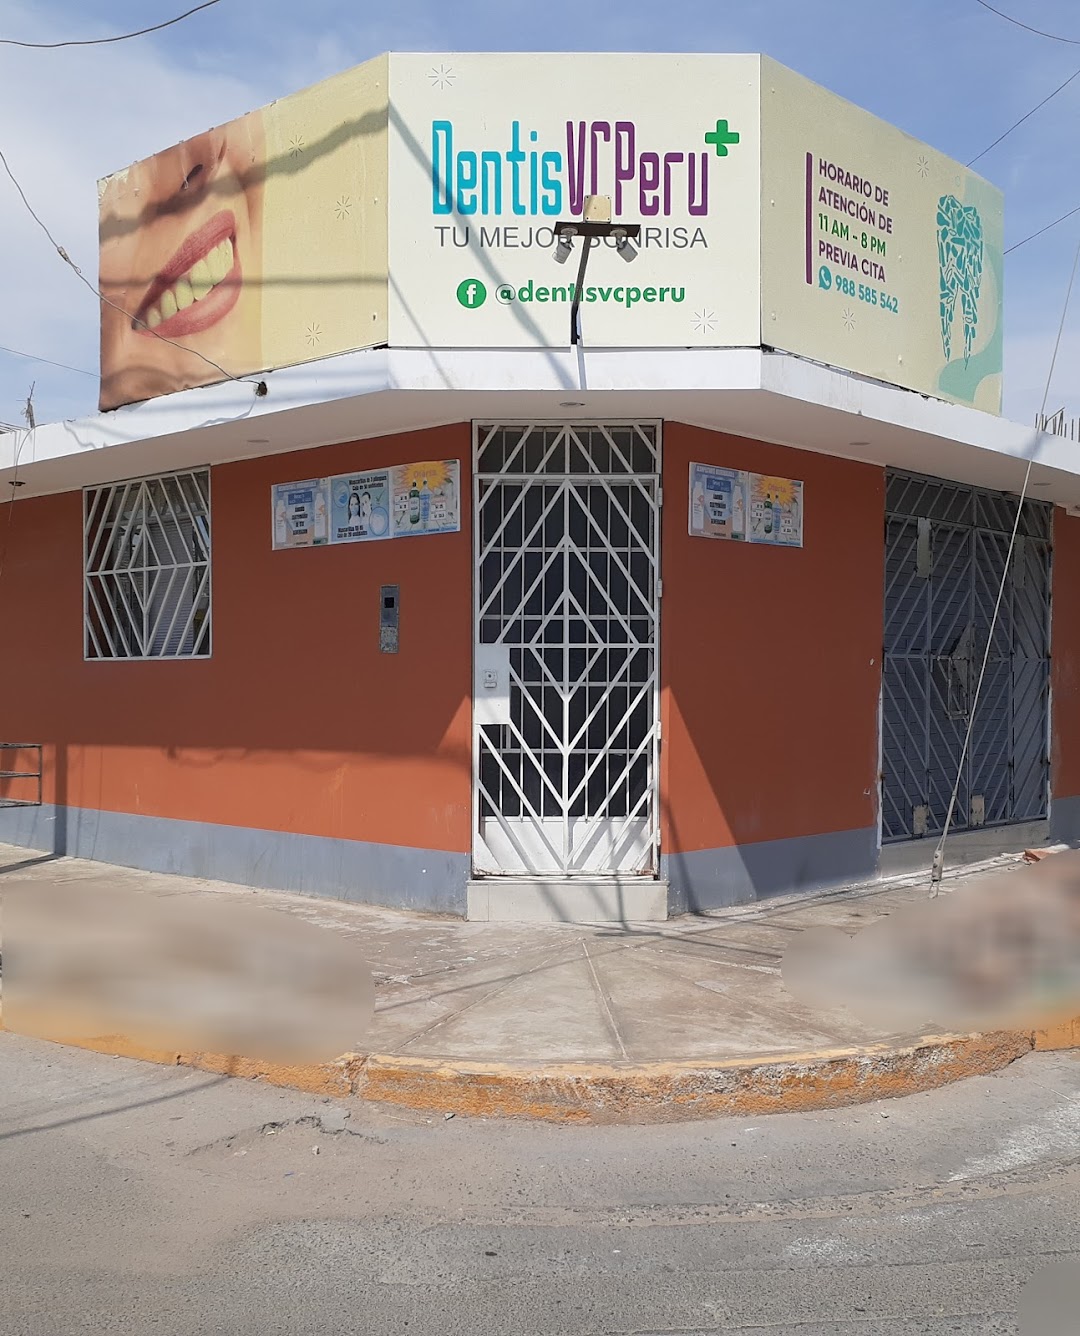 Dentis VC Peru